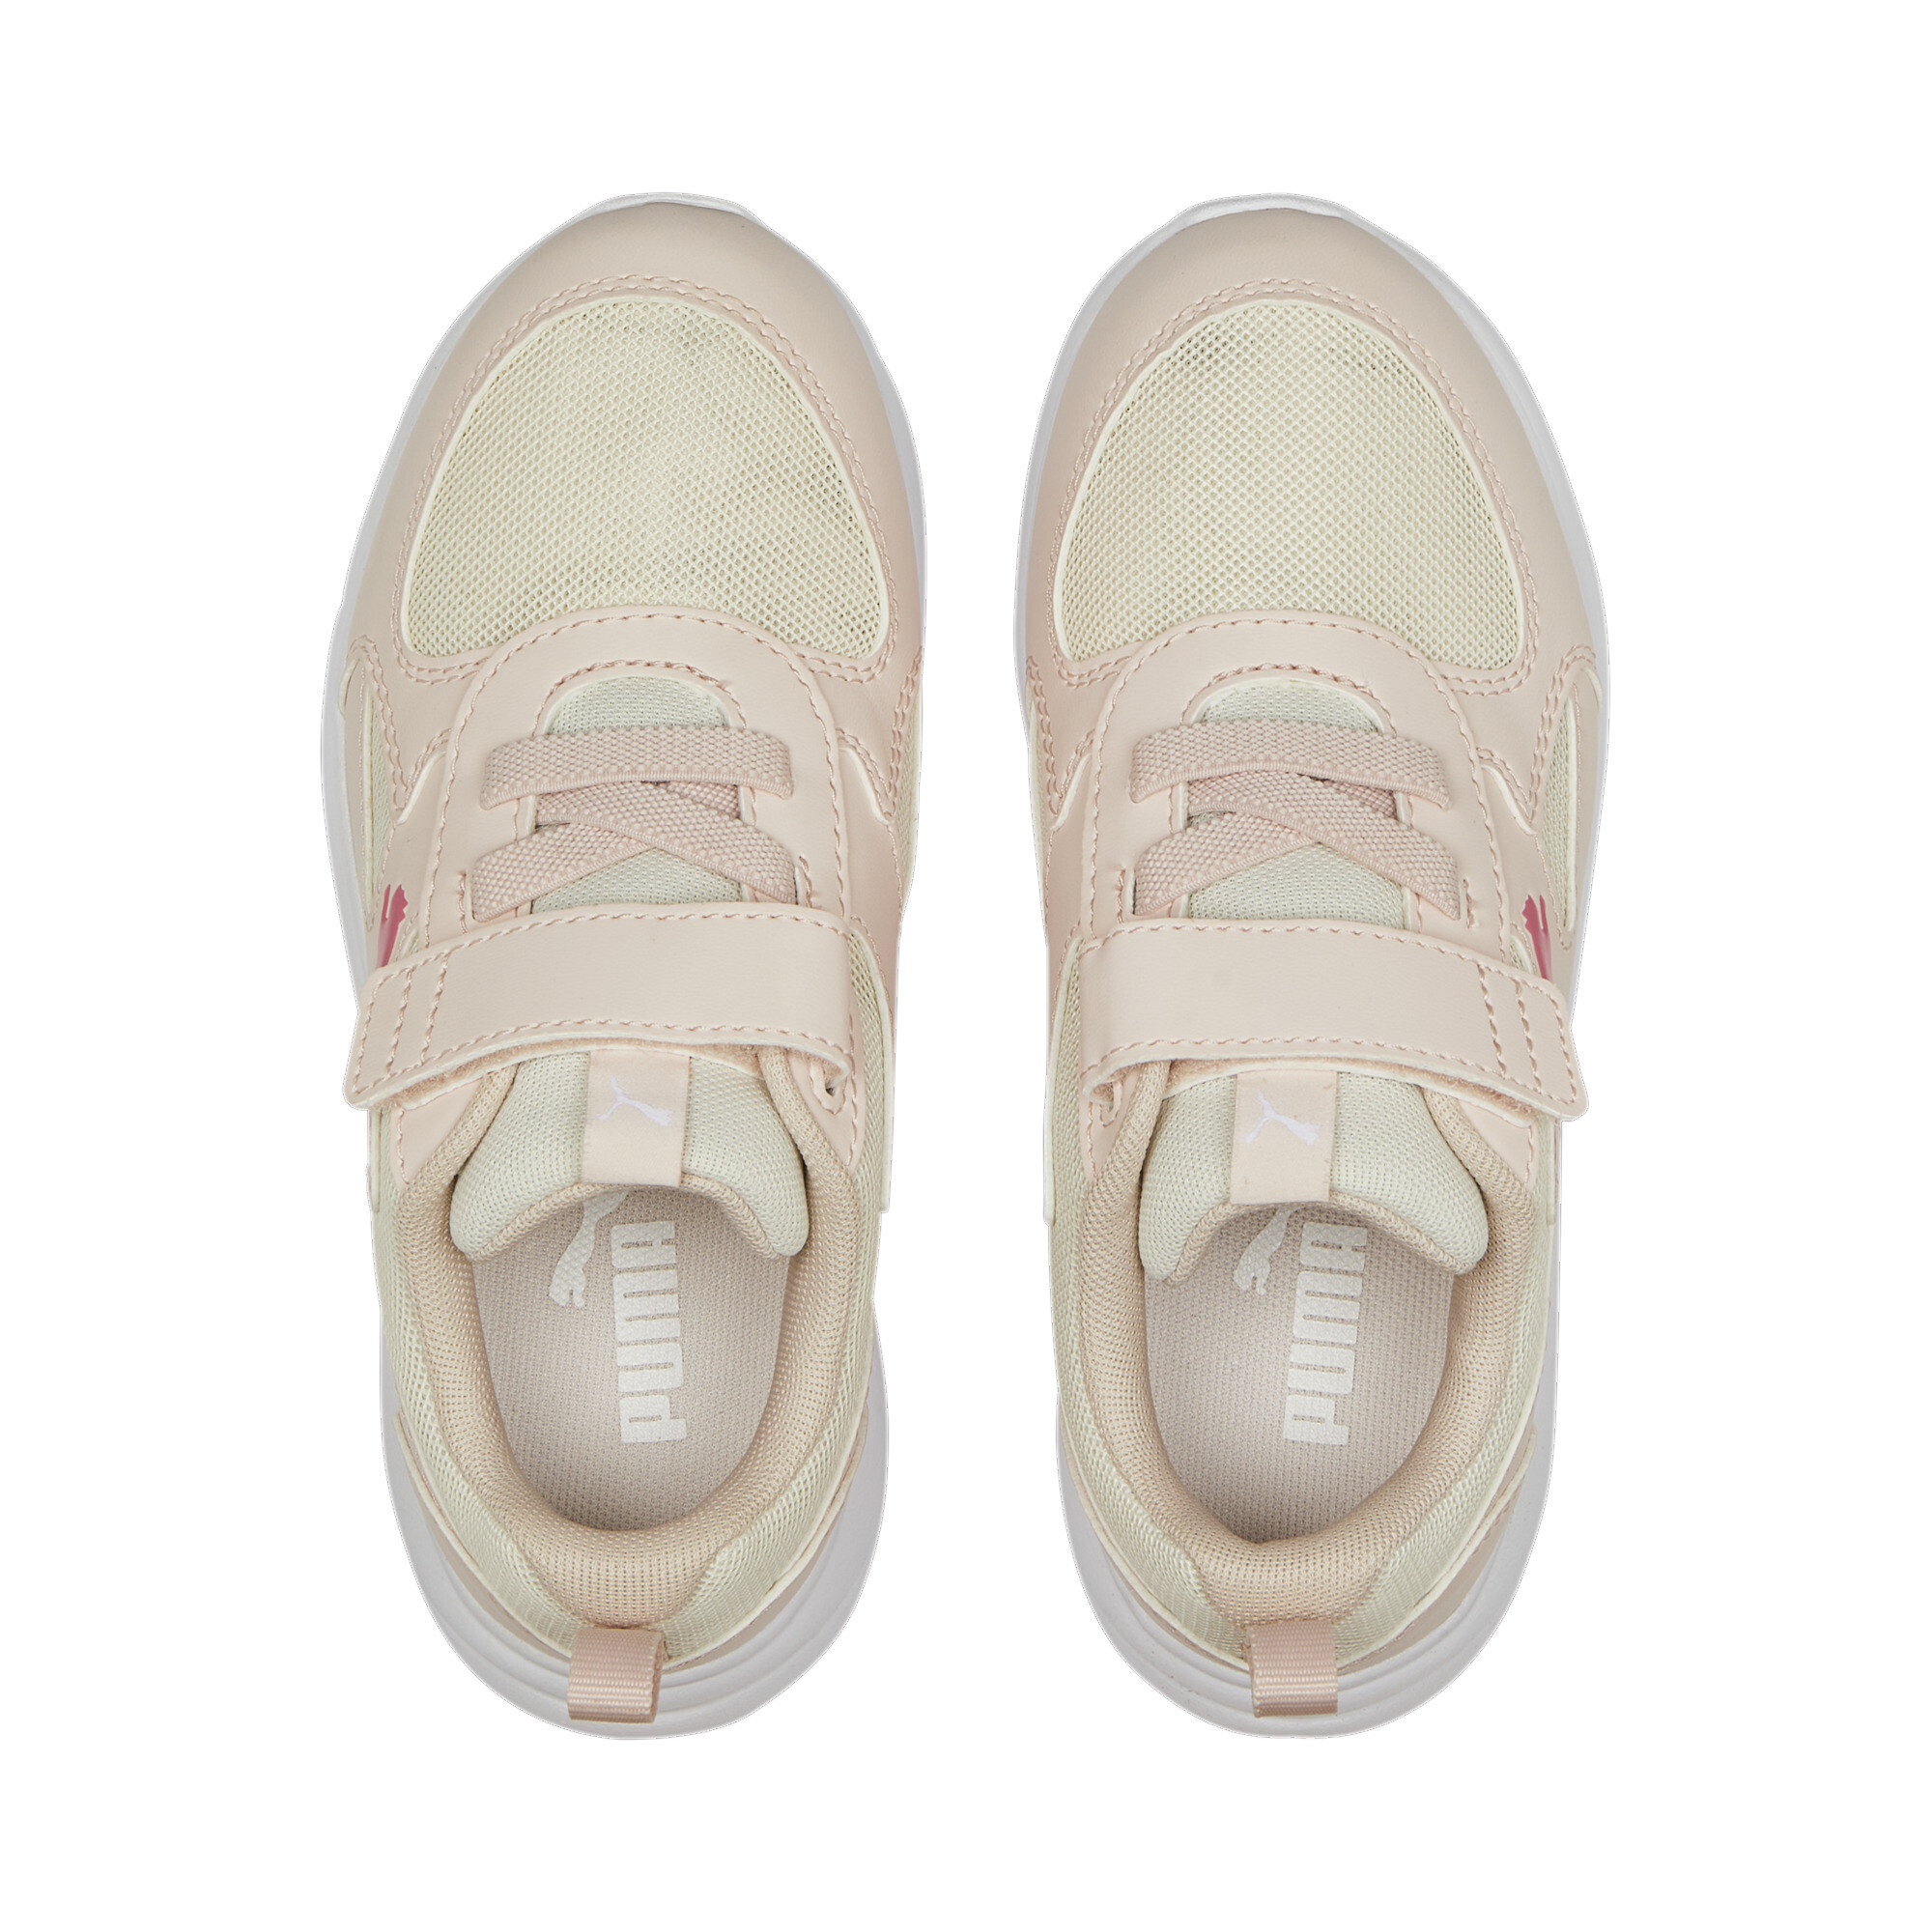 Kids' PUMA Fun Racer Sneakers In White/Pink, Size EU 32